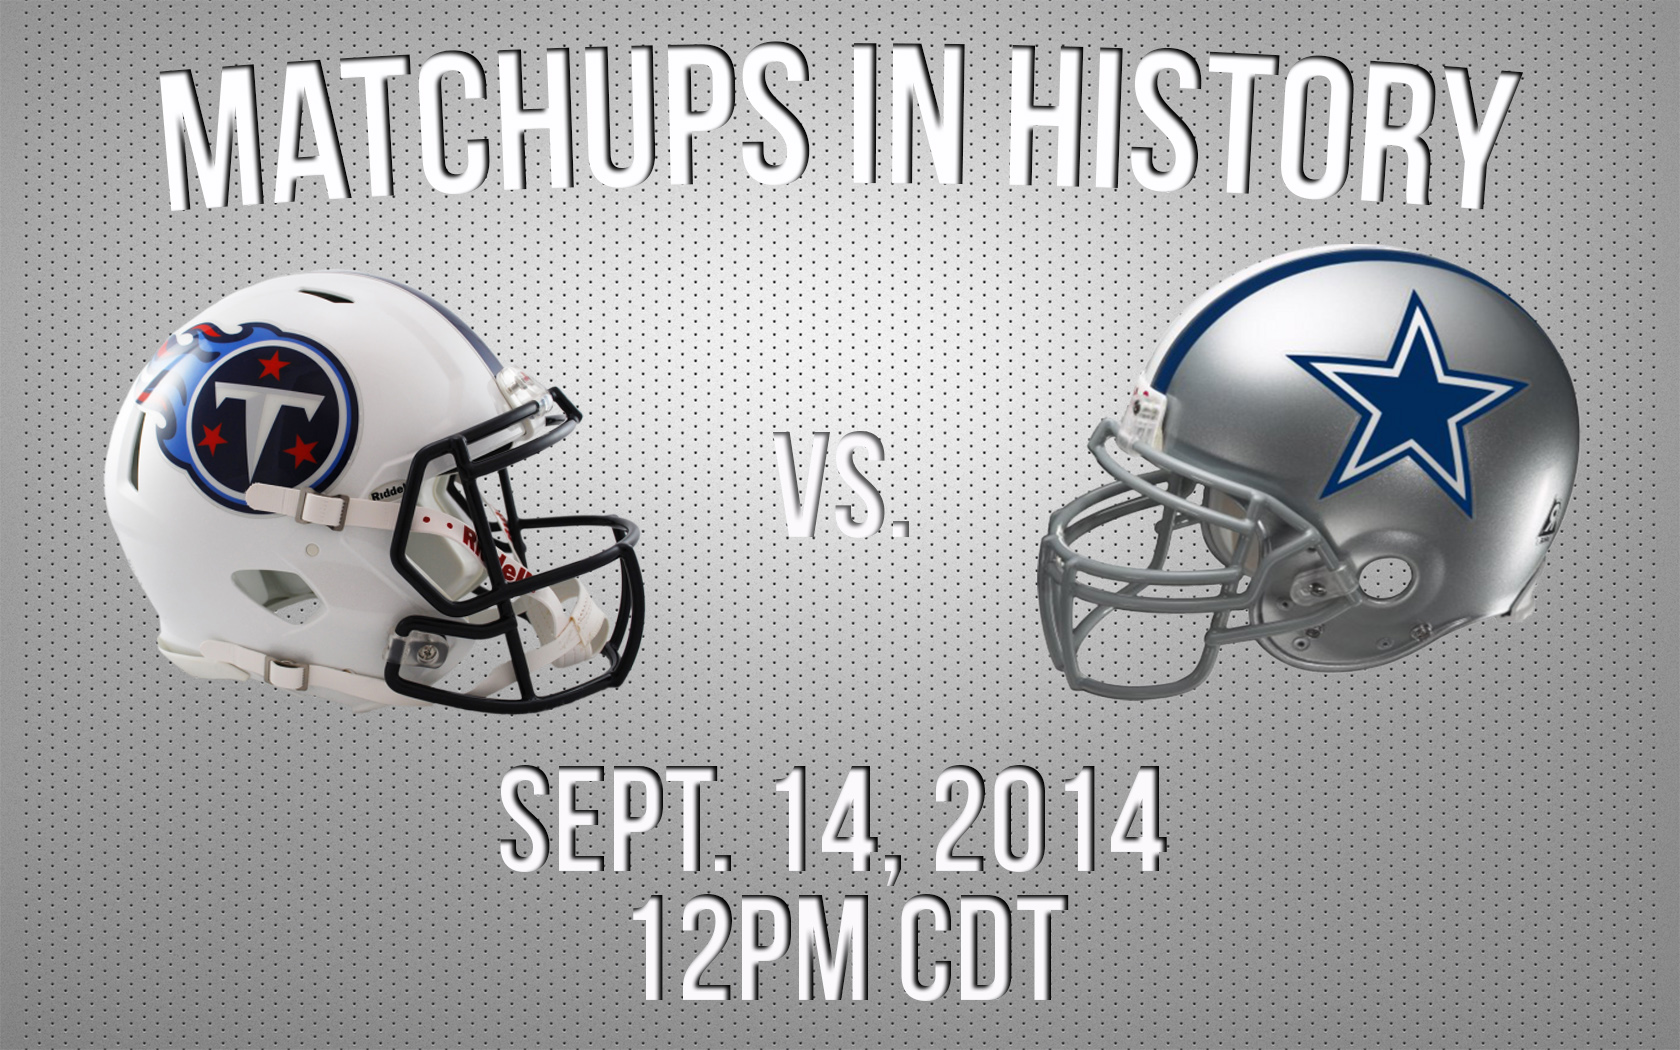 Matchups in History: Dallas Cowboys vs. Tennessee Titans